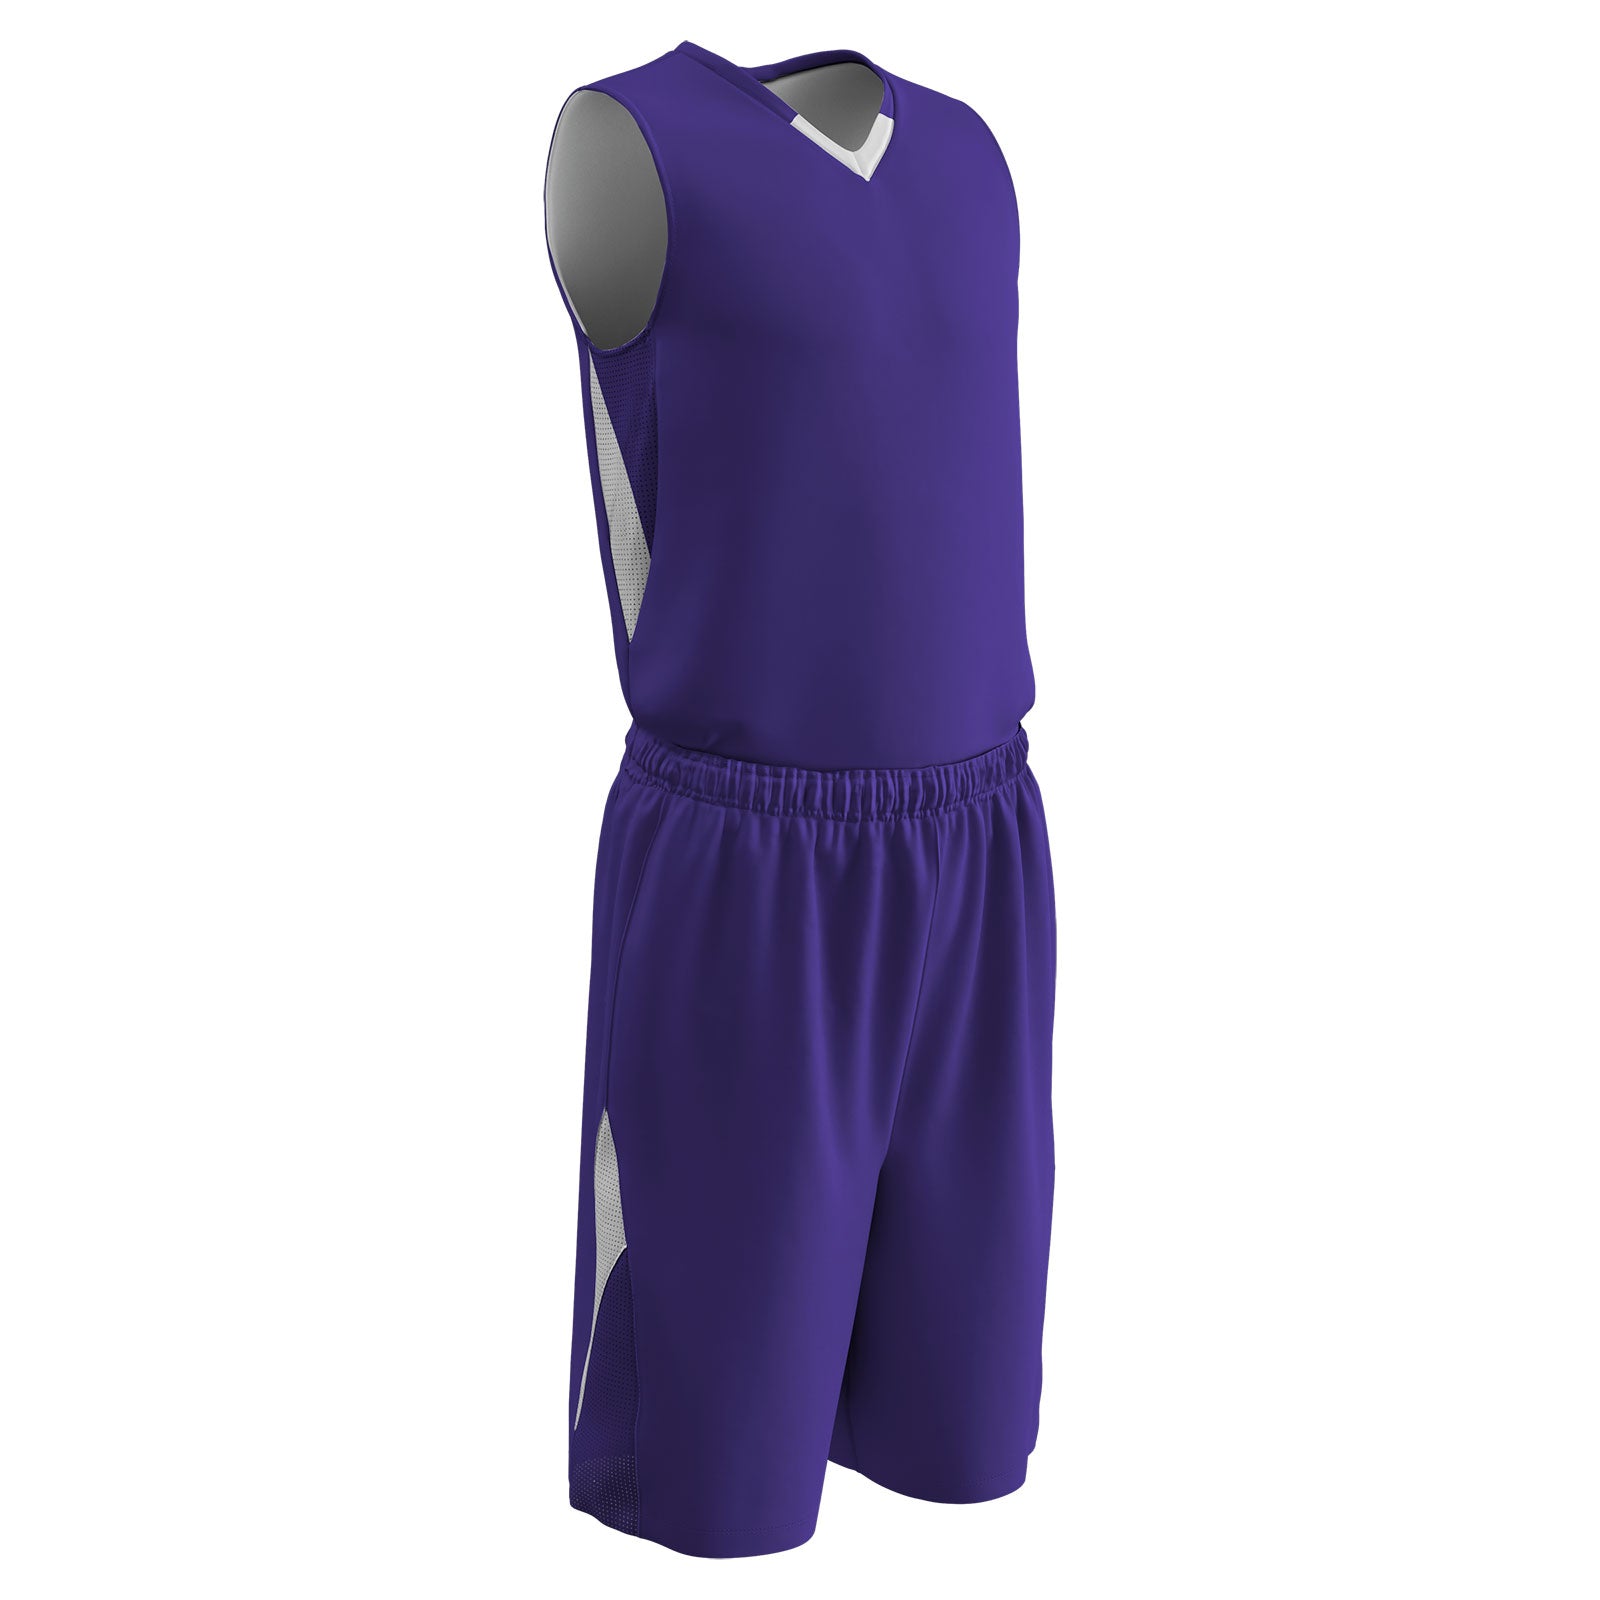 PASCO Pacers Full Dye Reversible Basketball Jersey Adult Medium